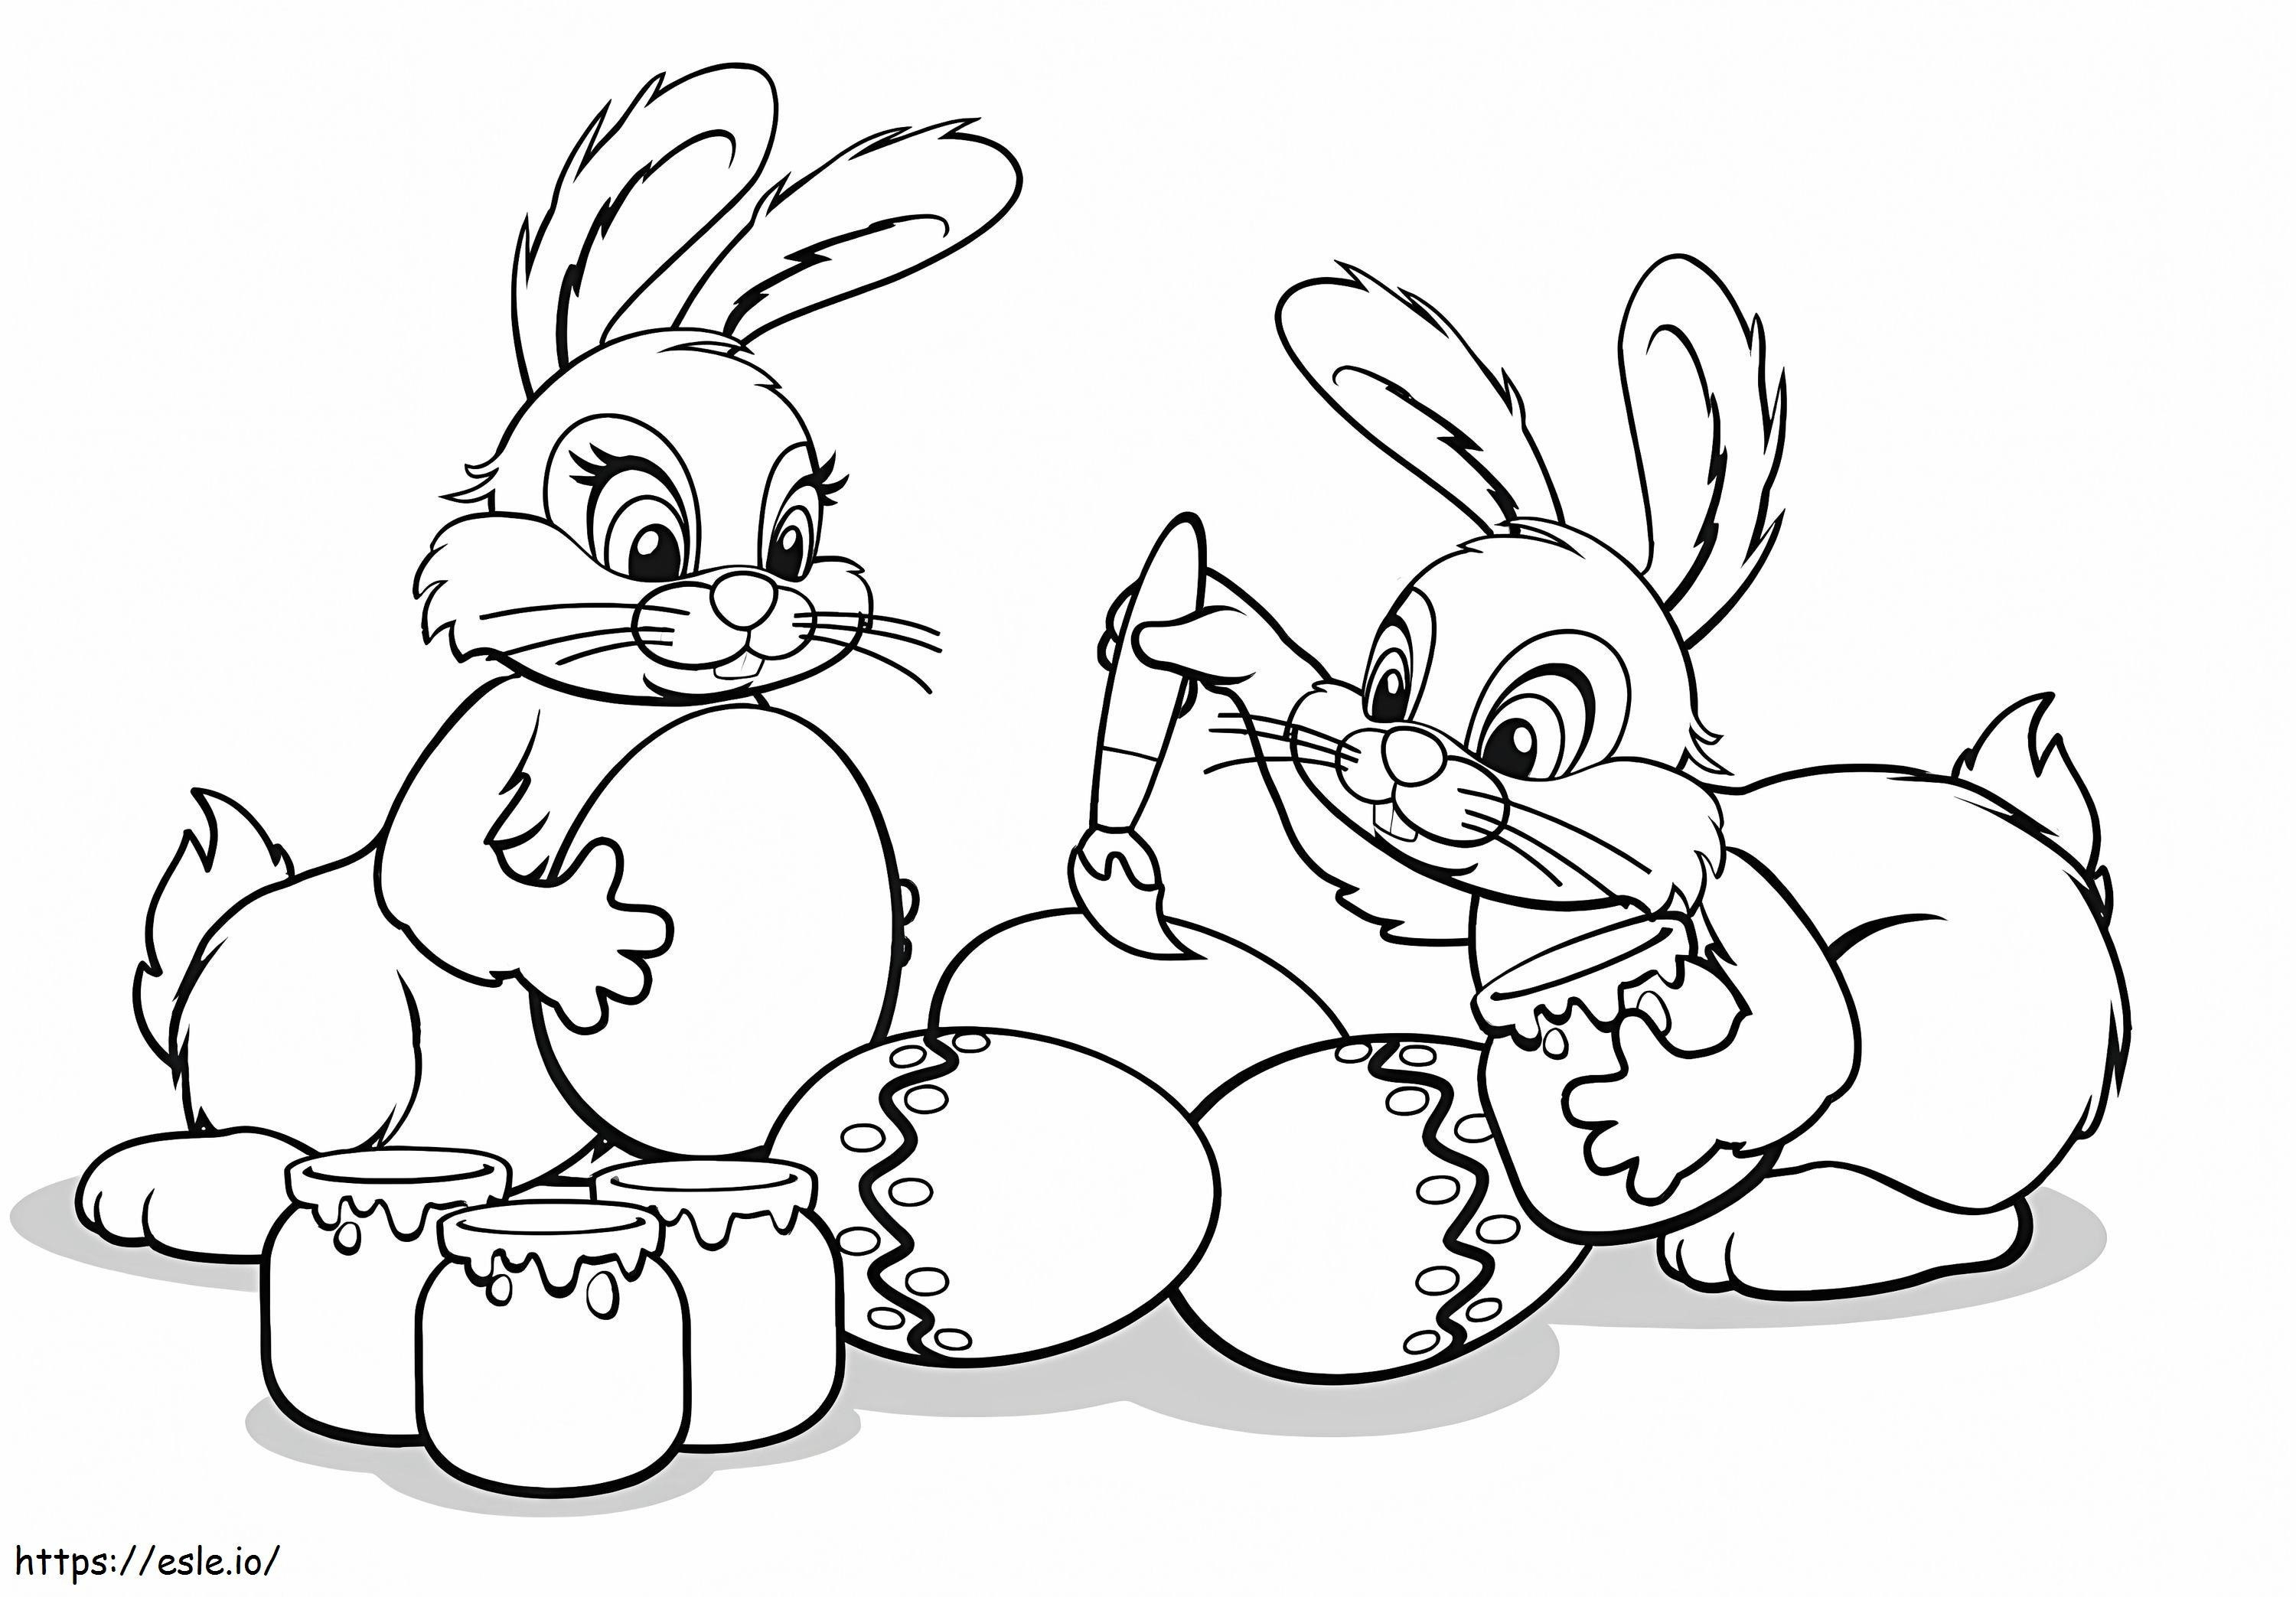 Dibujo de dos conejitos para colorear